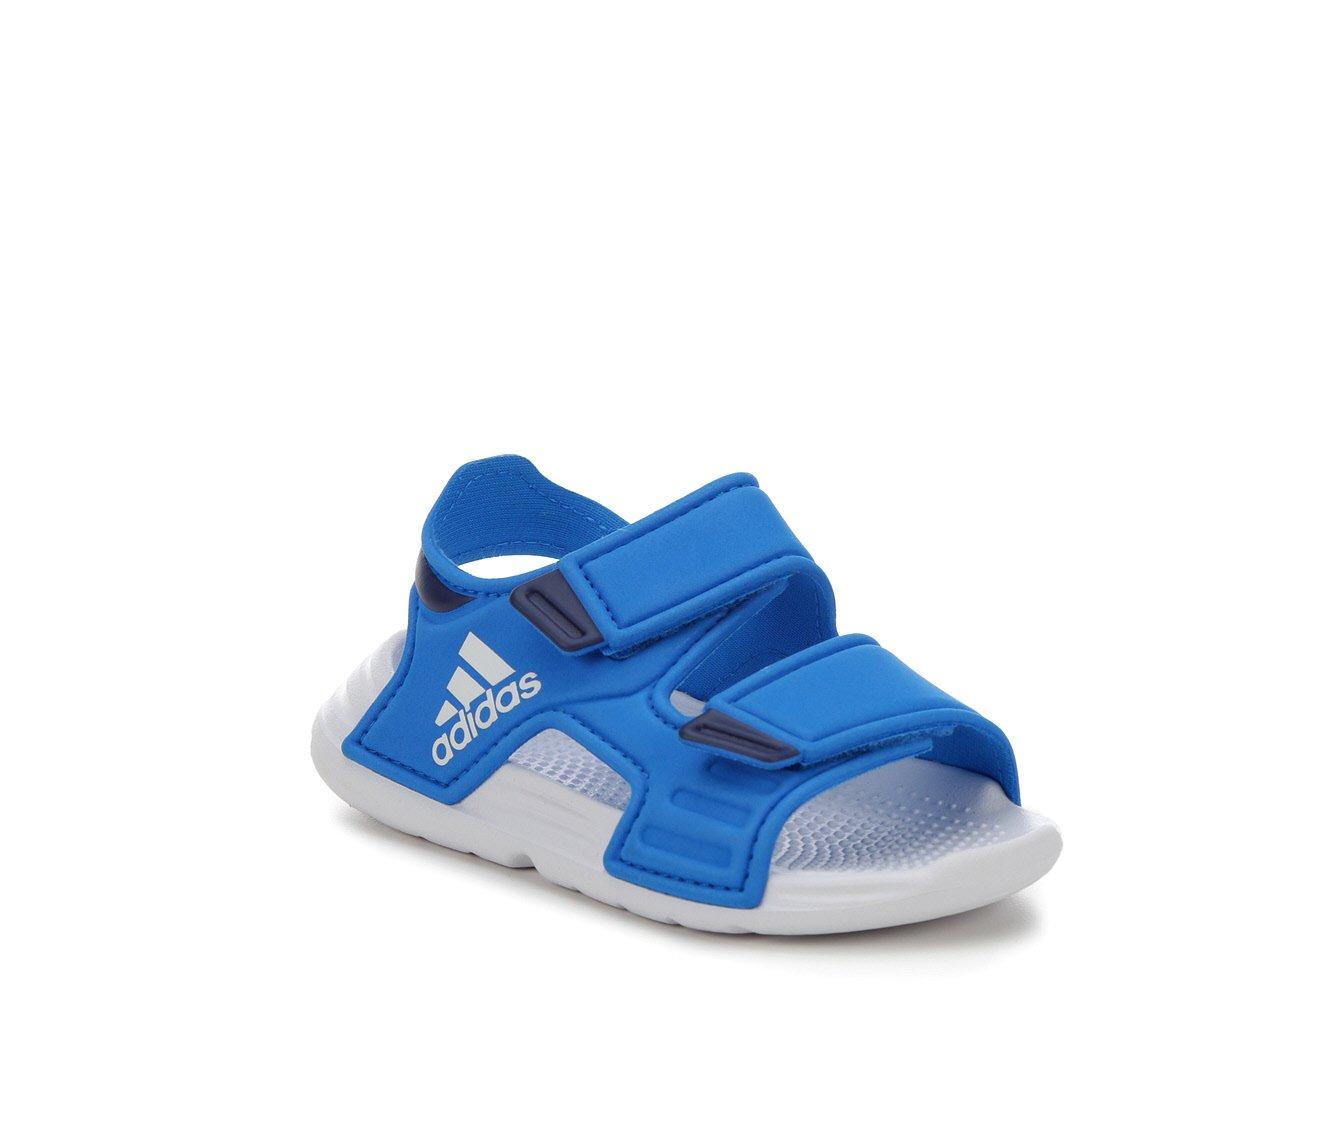 Overtollig compressie vastleggen Boys' Adidas Infant & Toddler Alta Swim Sandals